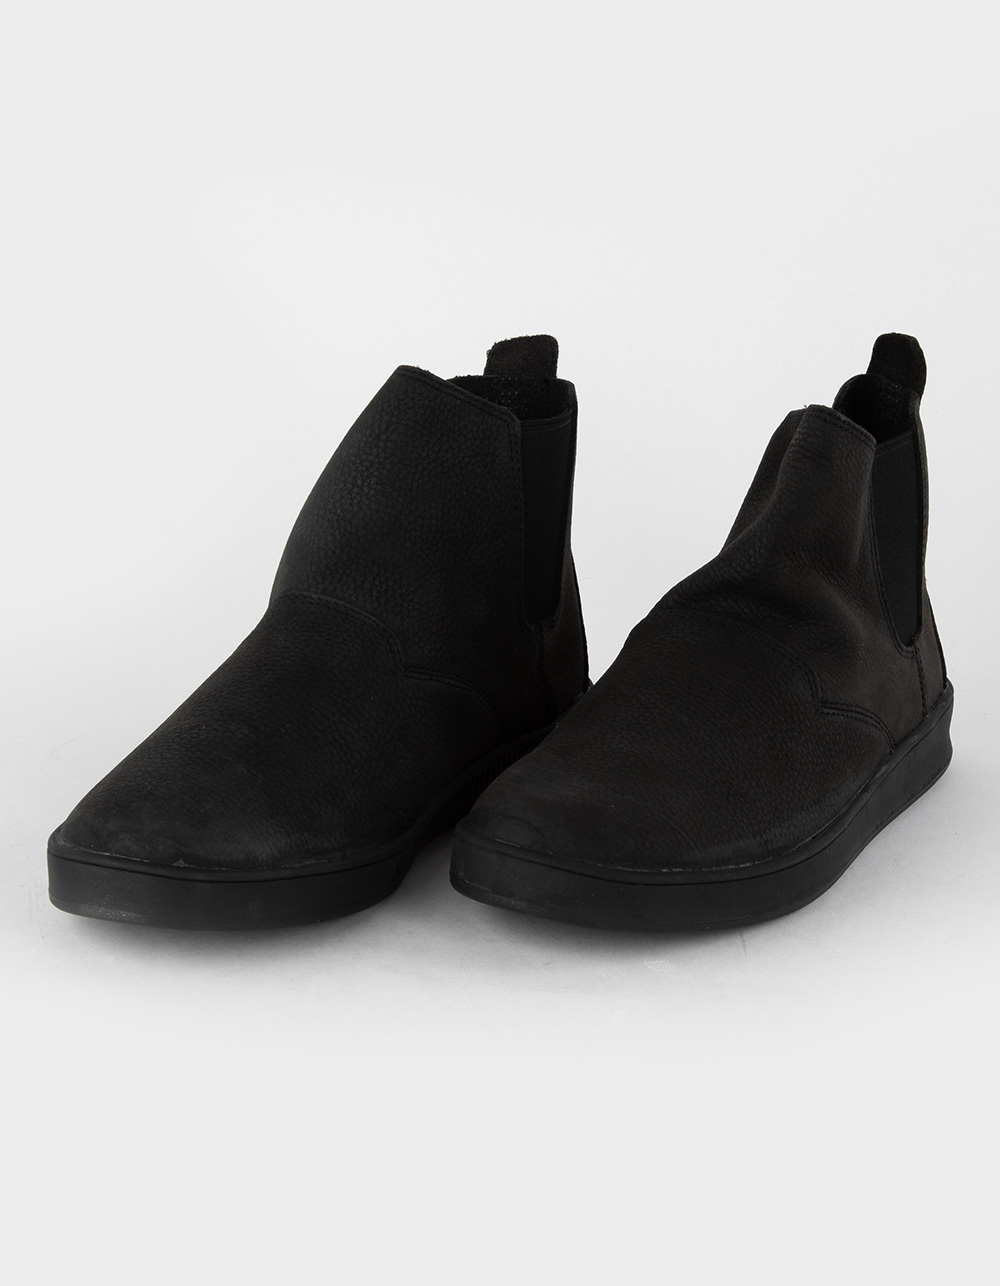 EMERICA Romero Chelsea Mens Boots - BLACK | Tillys